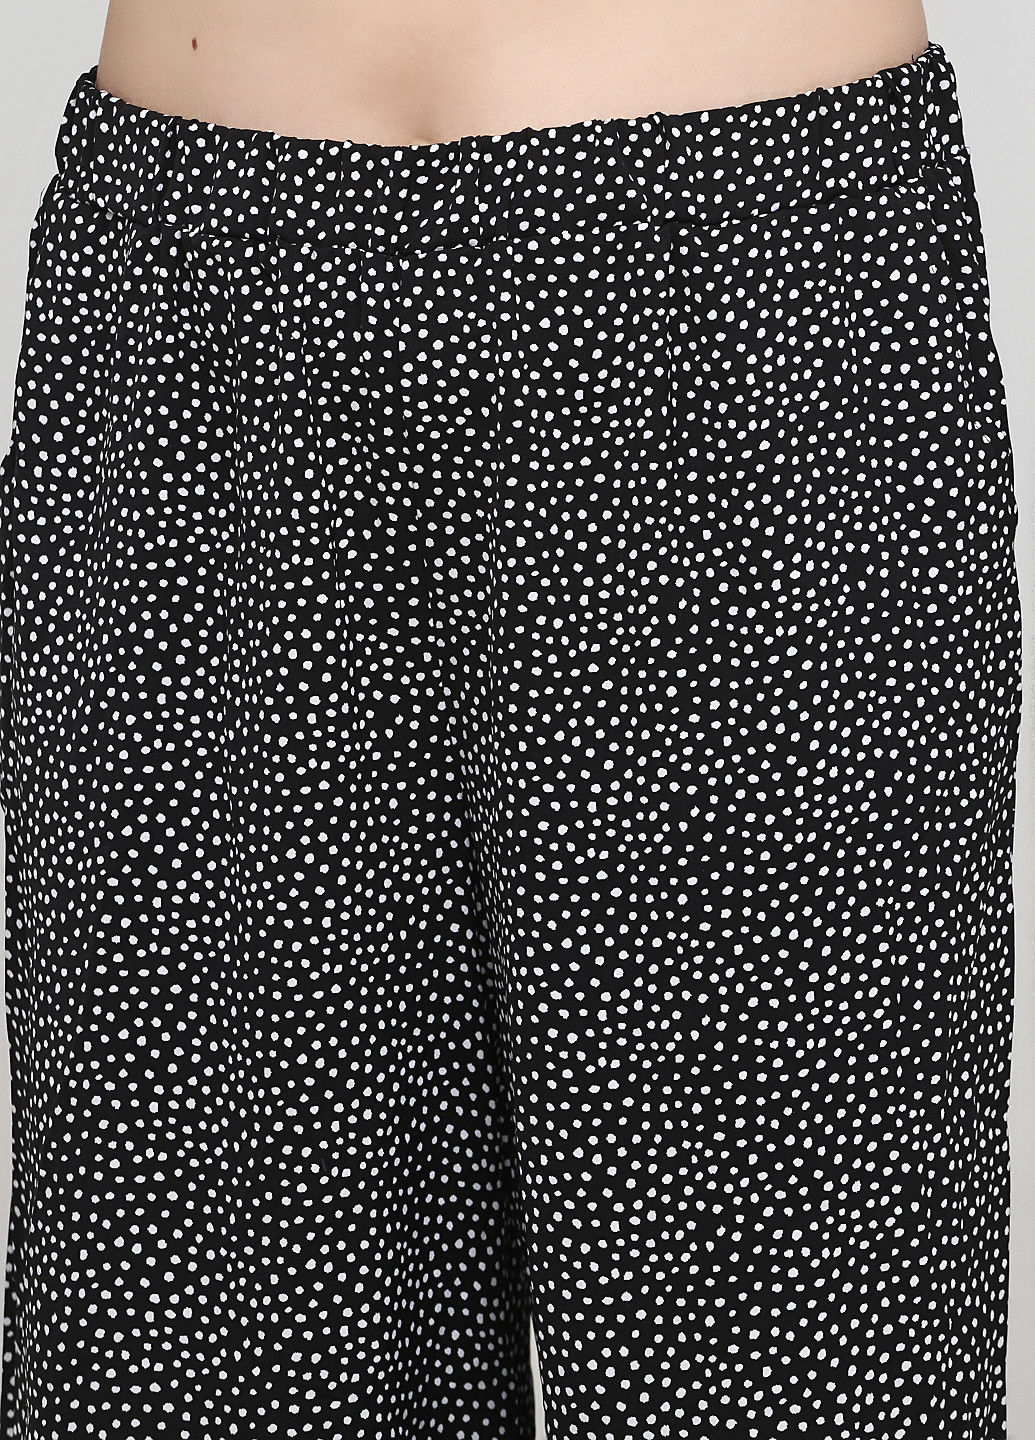 Костюм (блуза, брюки) Avon брючный горошек чёрно-белого кэжуал трикотаж, полиэстер